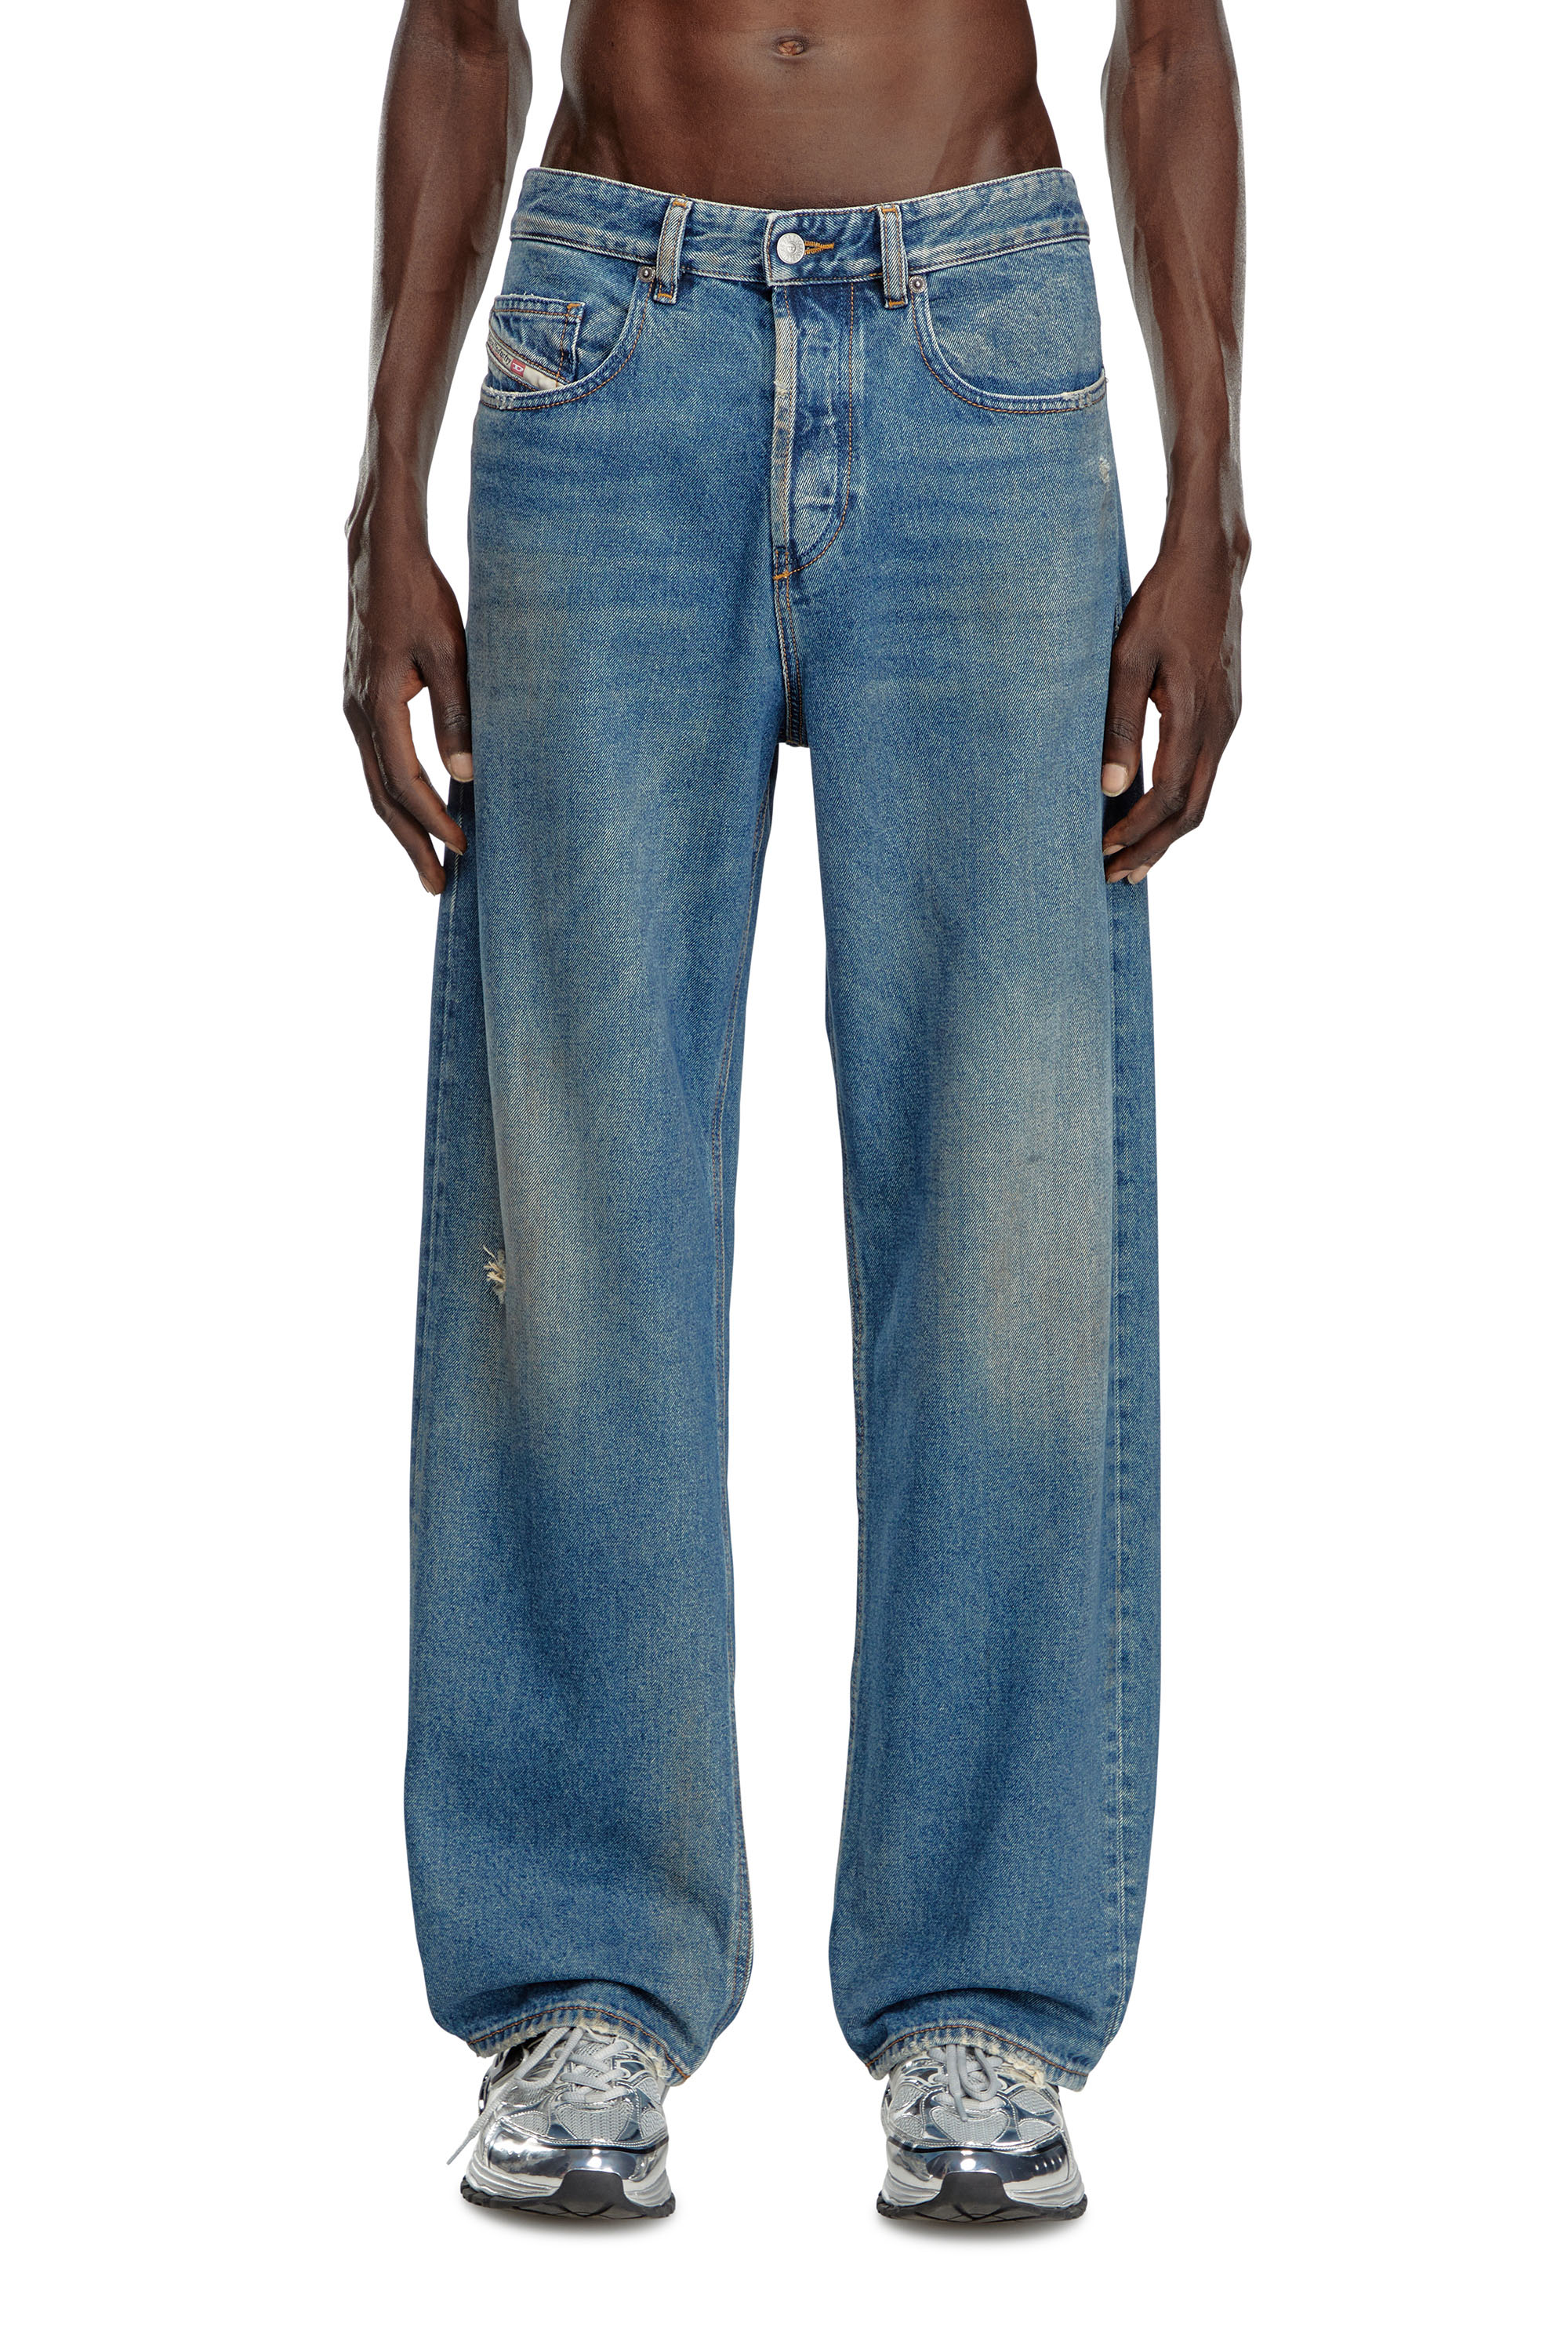 Diesel - Straight Jeans 2001 D-Macro 09J79, Hombre Straight Jeans - 2001 D-Macro in Azul marino - Image 3